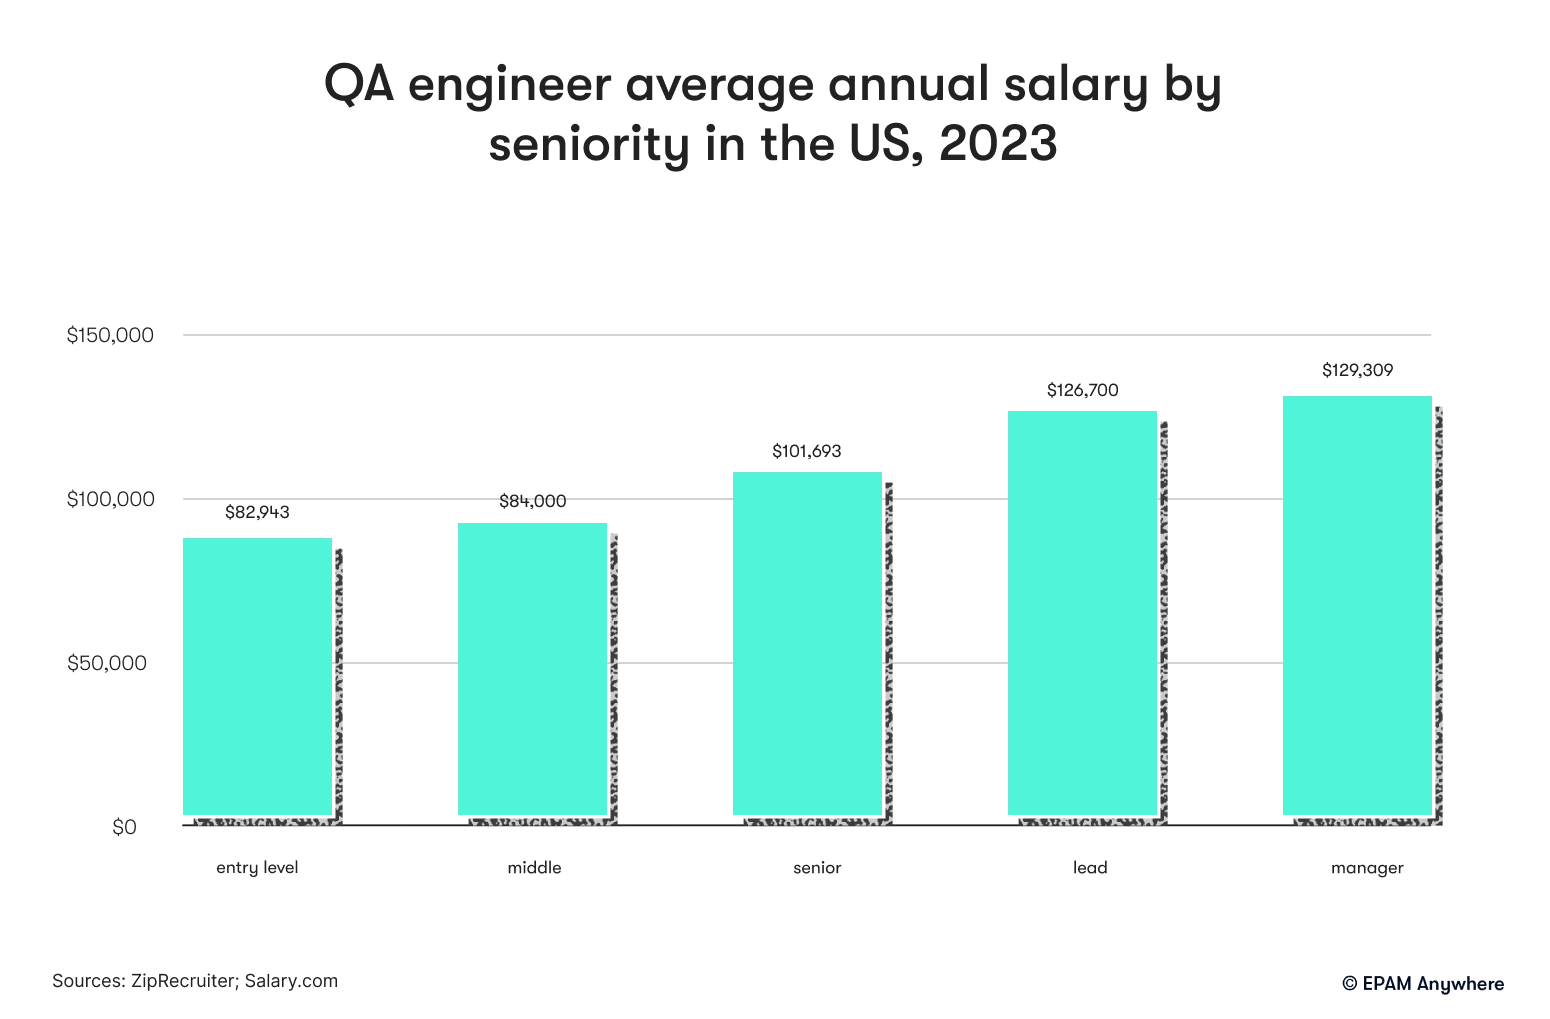 QA engineer average annual salary by seniority in the U.S., 2023